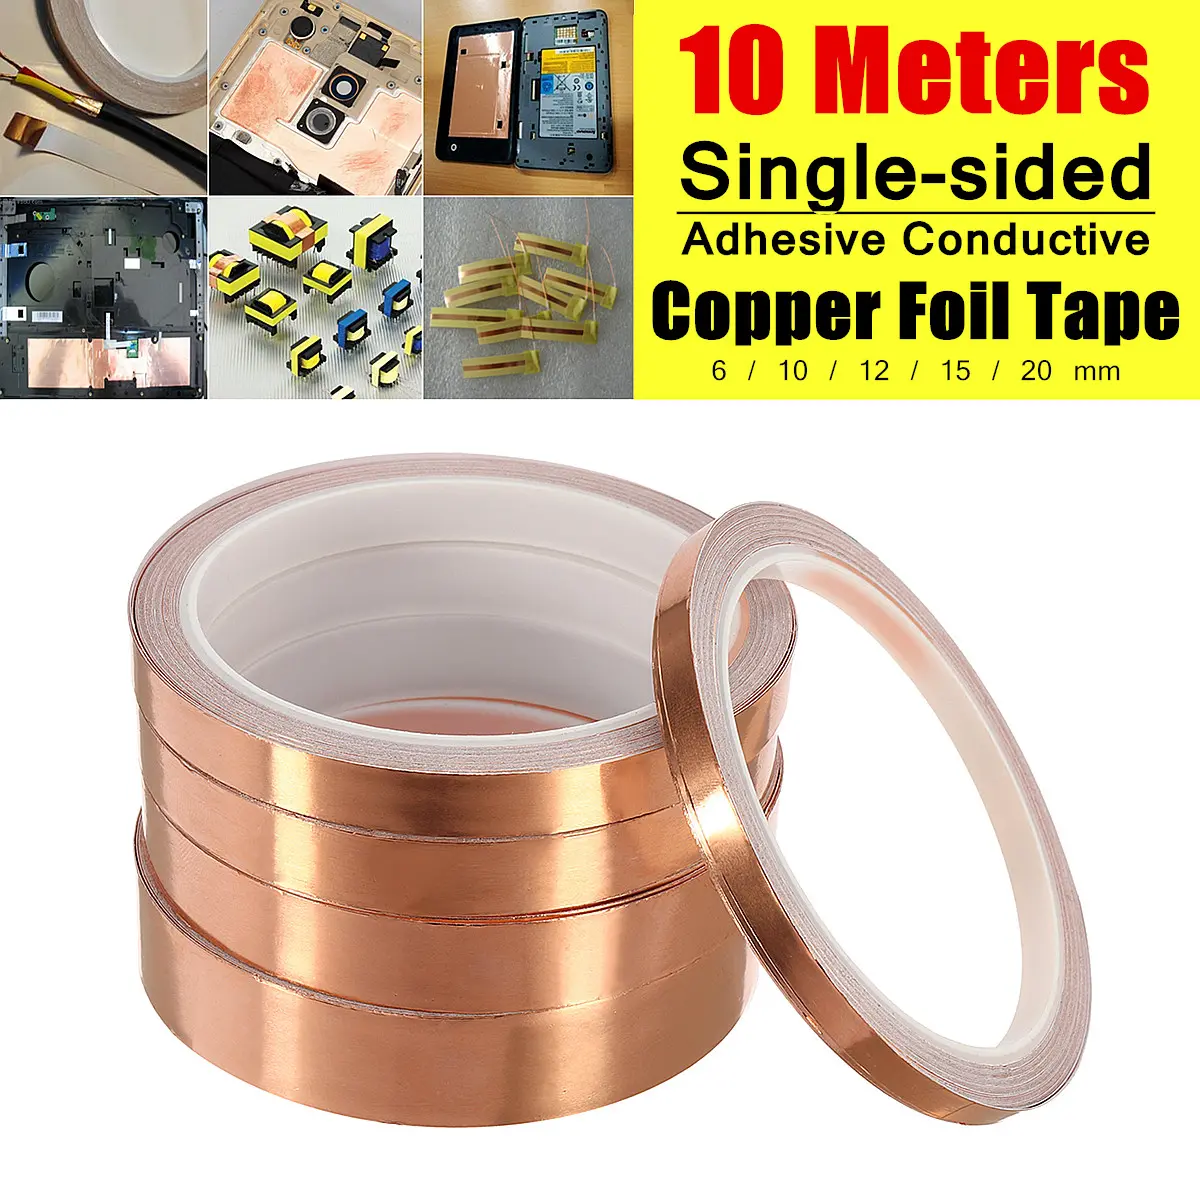 10M Adhesive Conductive Copper Foil Tape Single-sided Copper Slug Roll Tape Width 6/10/12/15/20mm